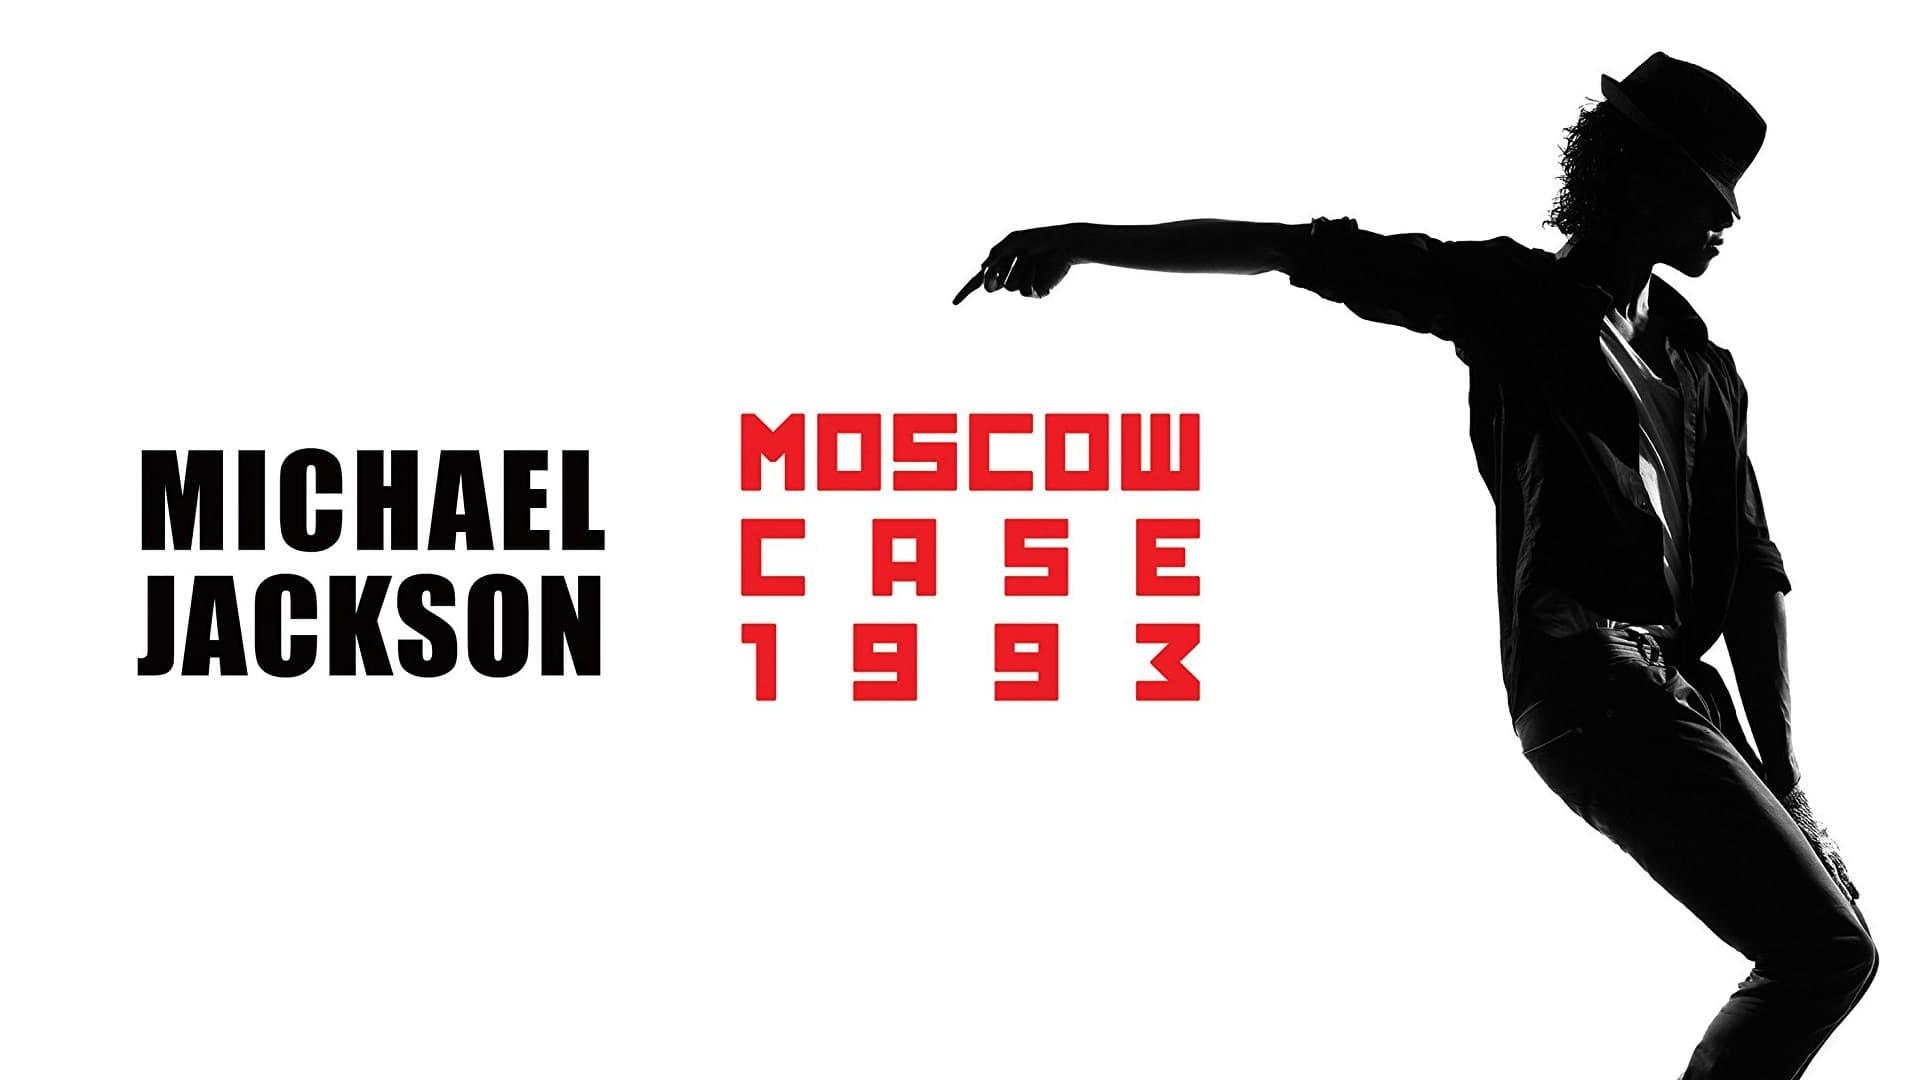 Michael Jackson: Moscow Case 1993 backdrop